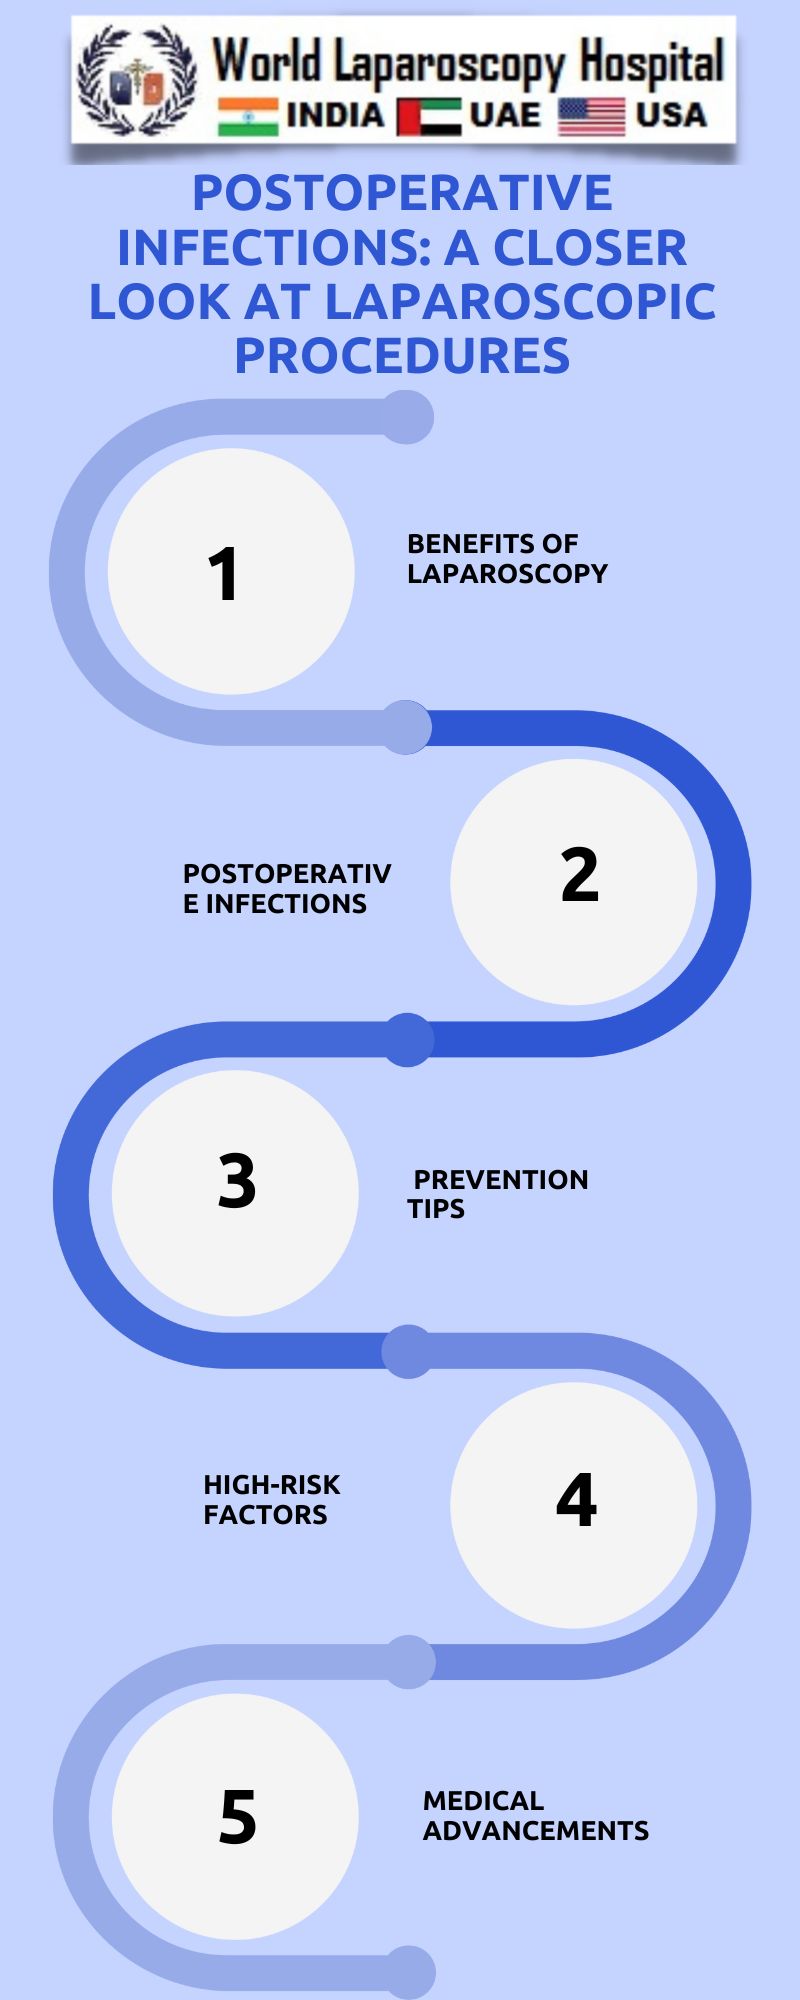 Postoperative Infections: A Closer Look at Laparoscopic Procedures